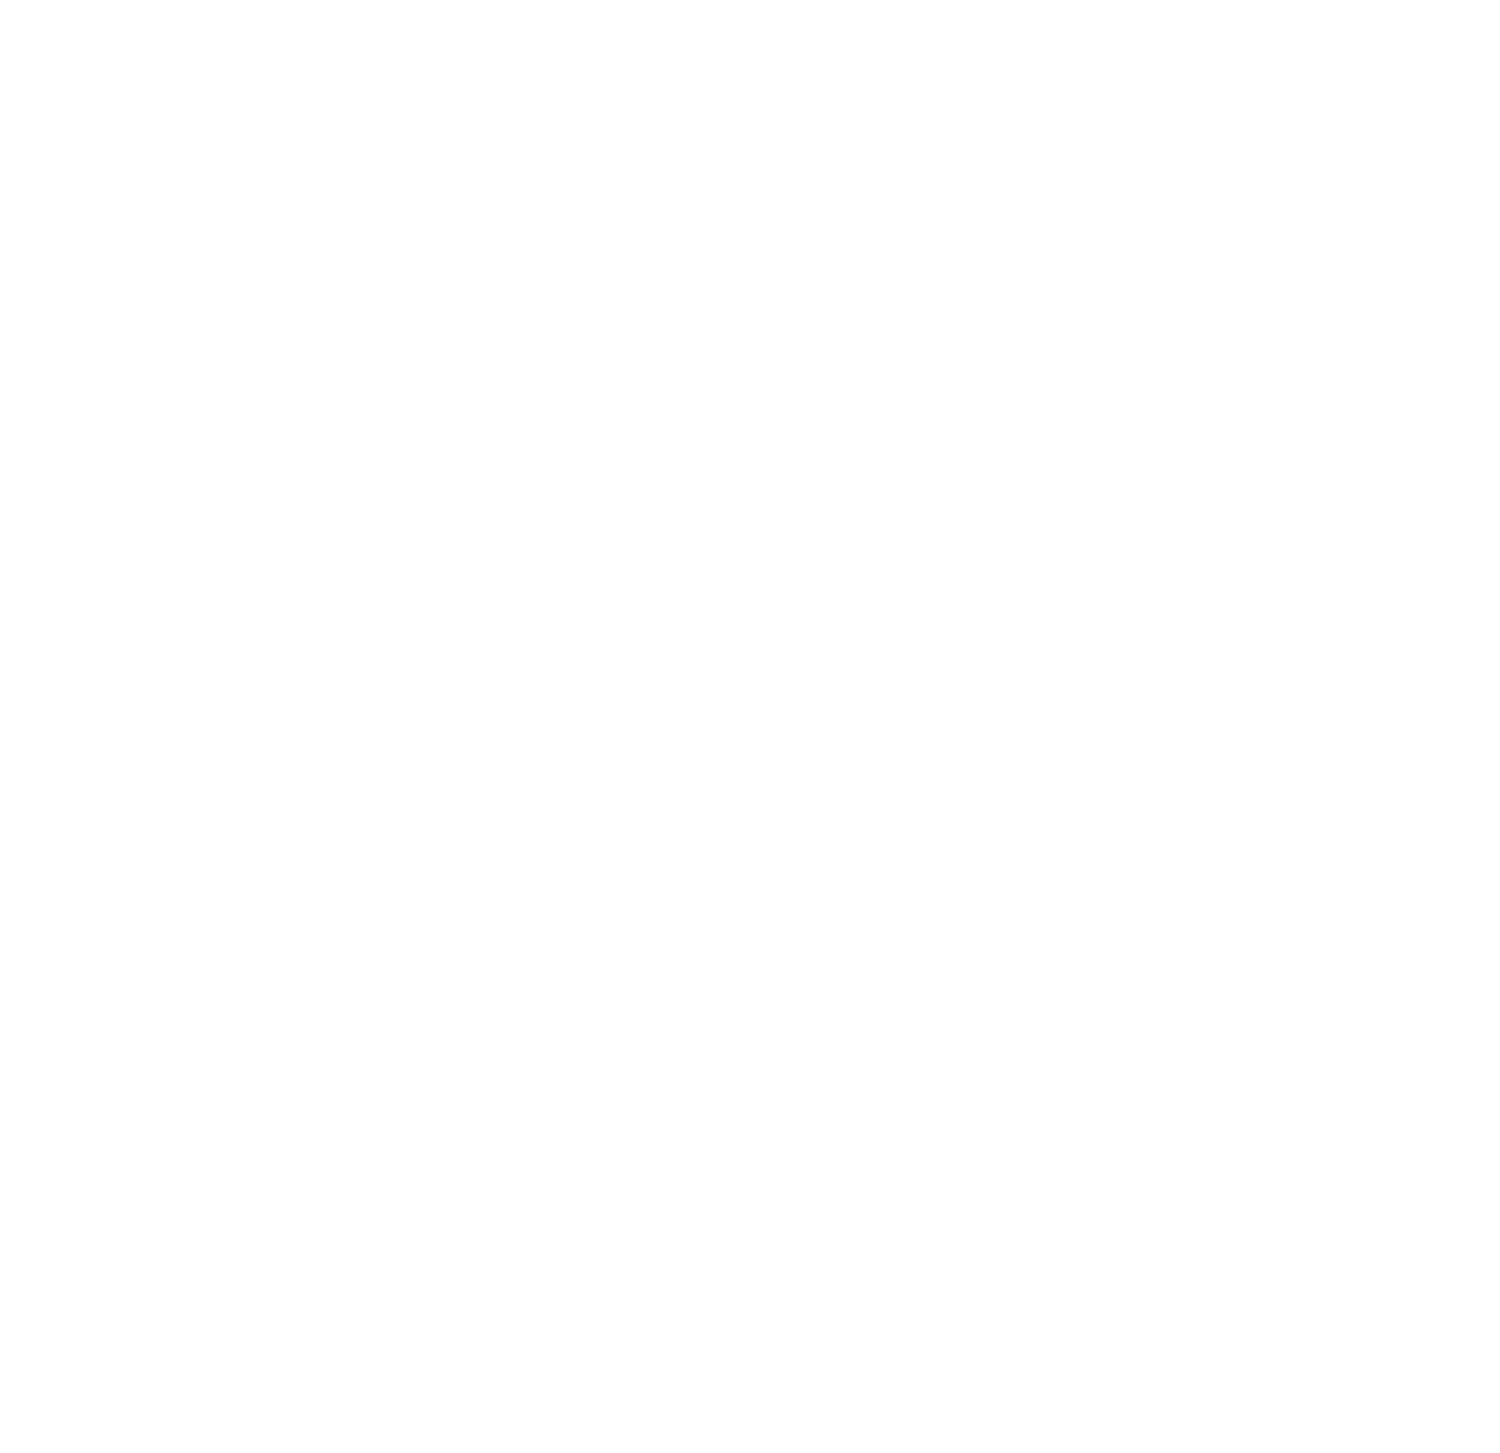 Futura Egg Donation